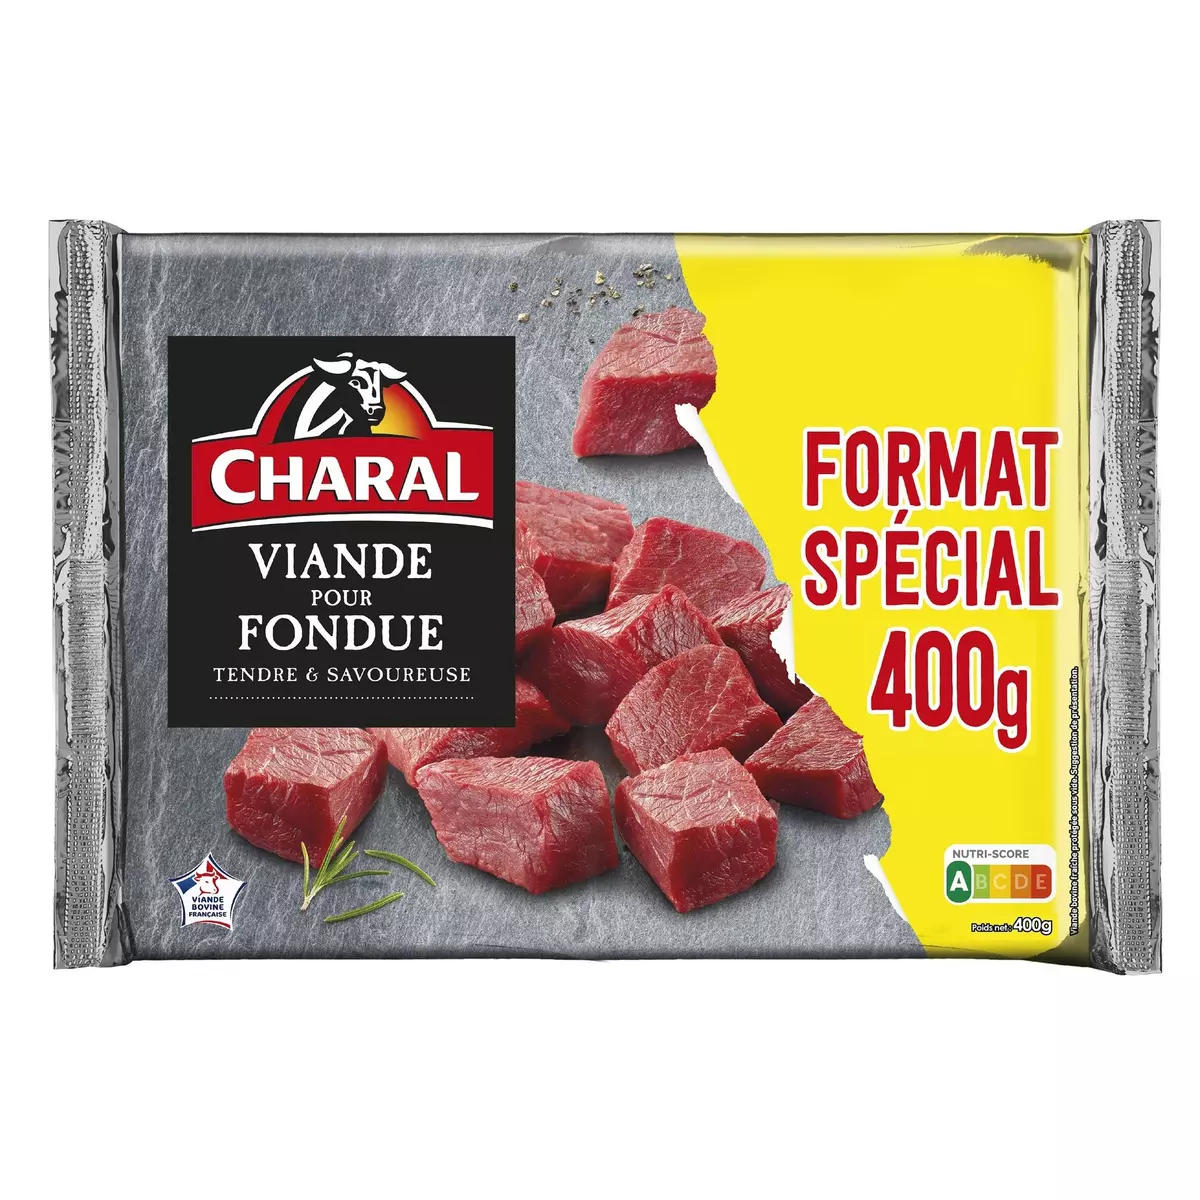 Charal : n°1 français de la viande